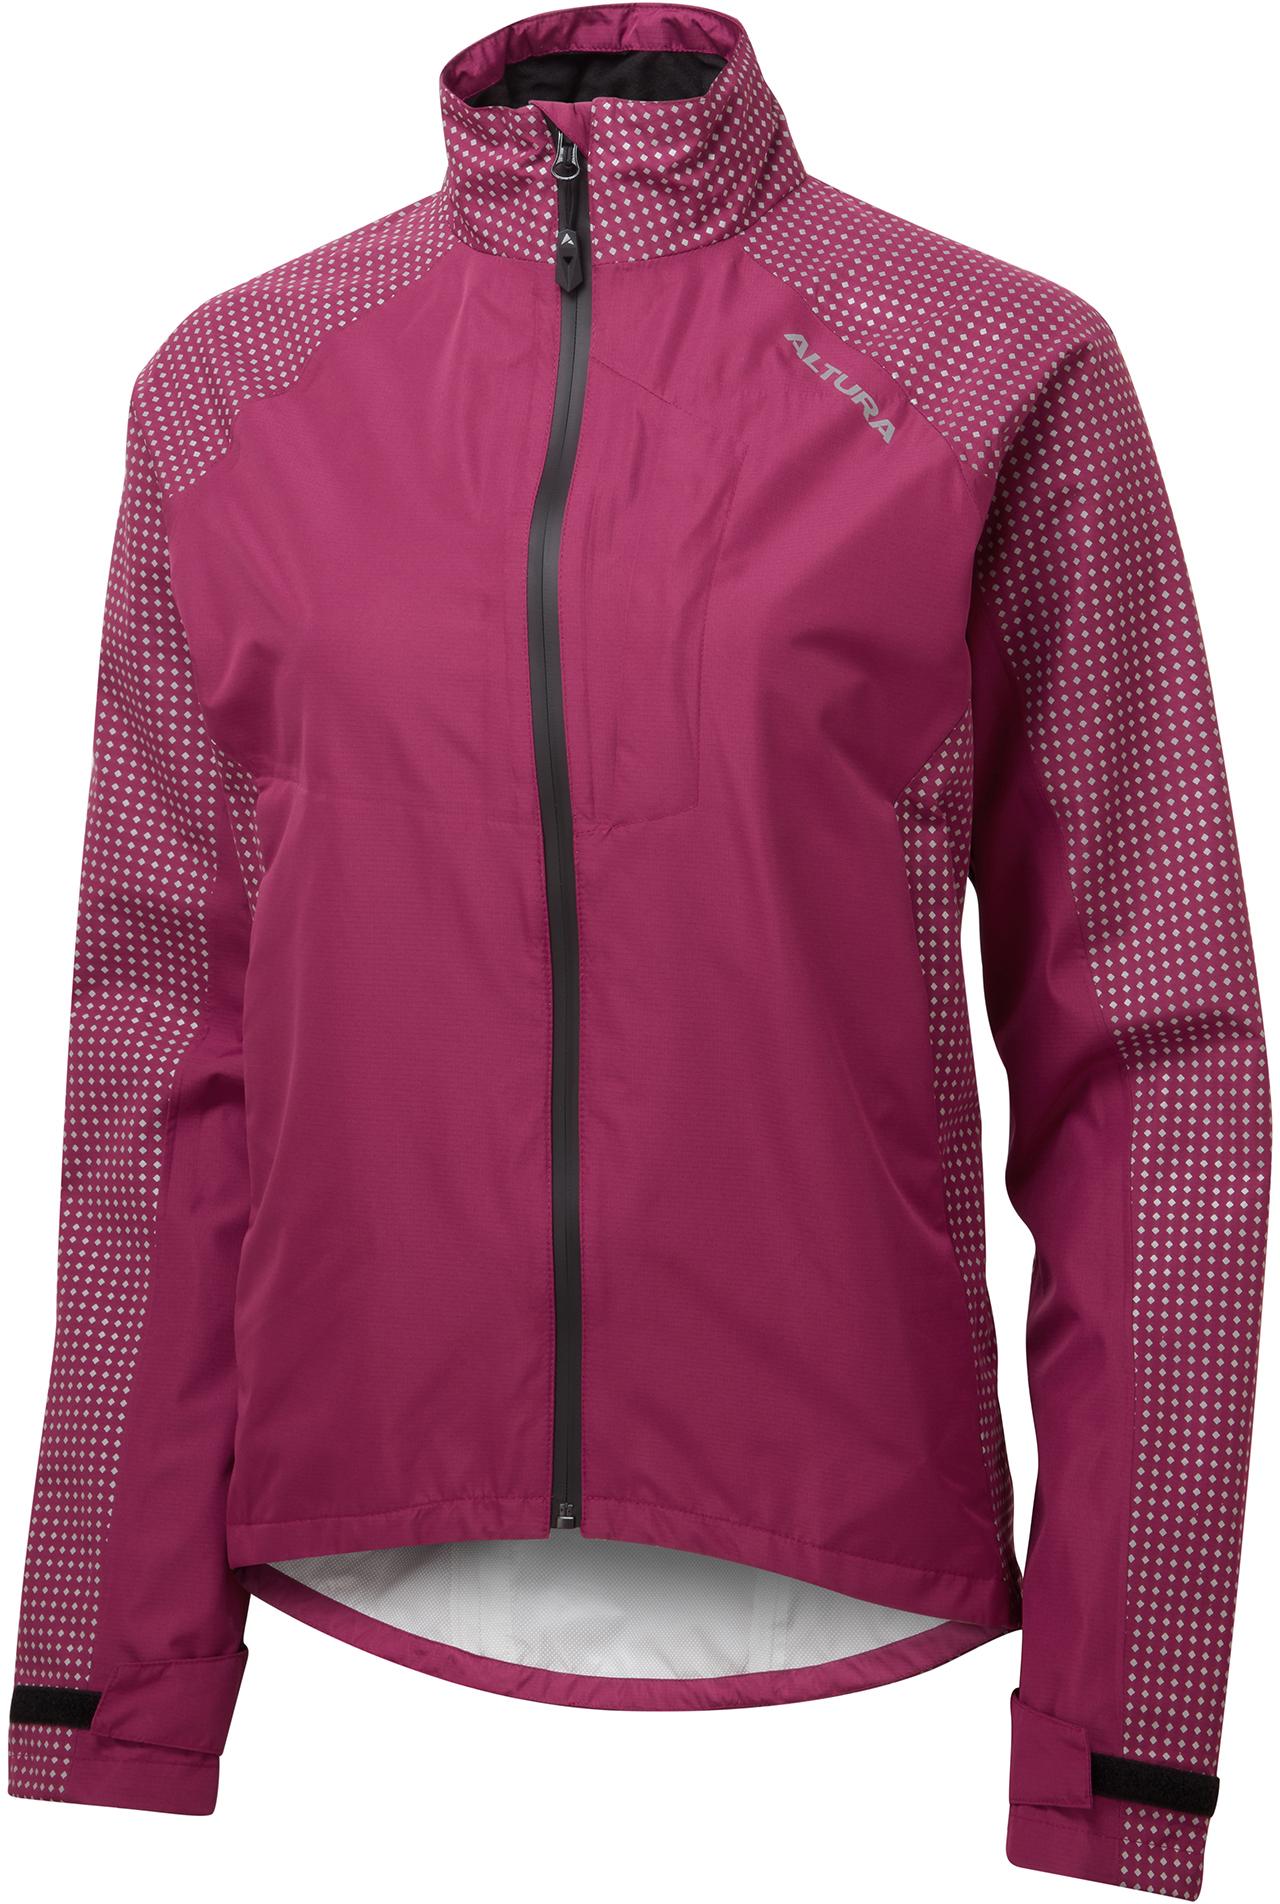 Altura Nightvision Storm Women's Waterproof Jacket Pink 16